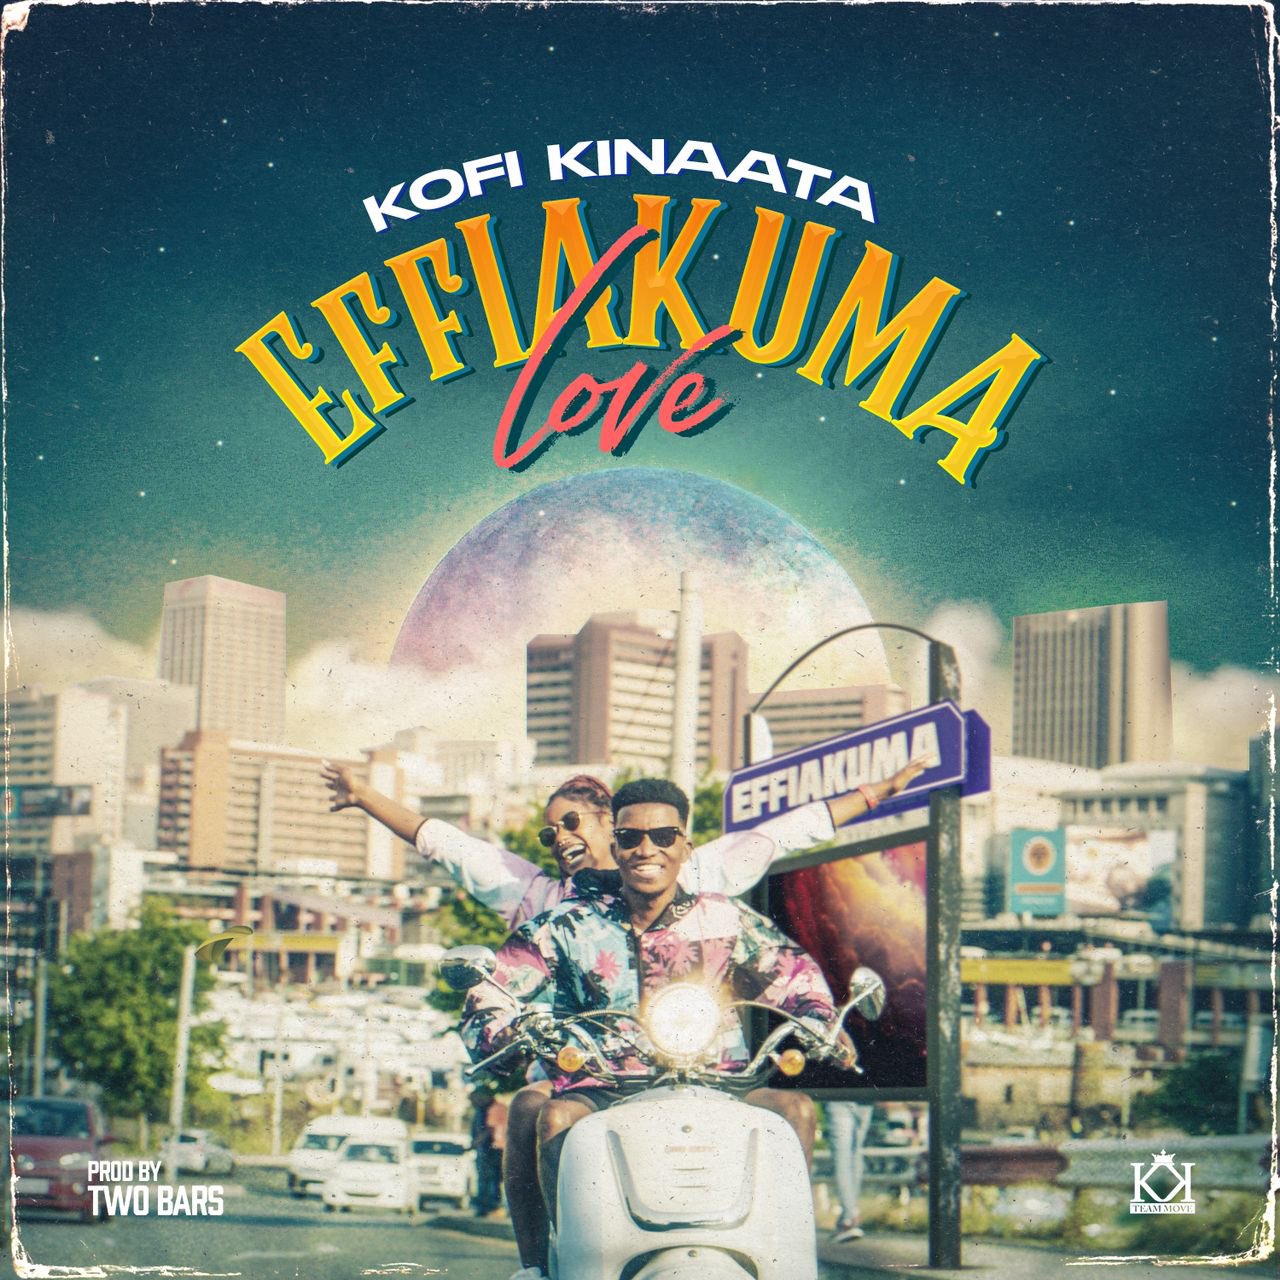 Kofi Kinaata - Effiakuma Love 12